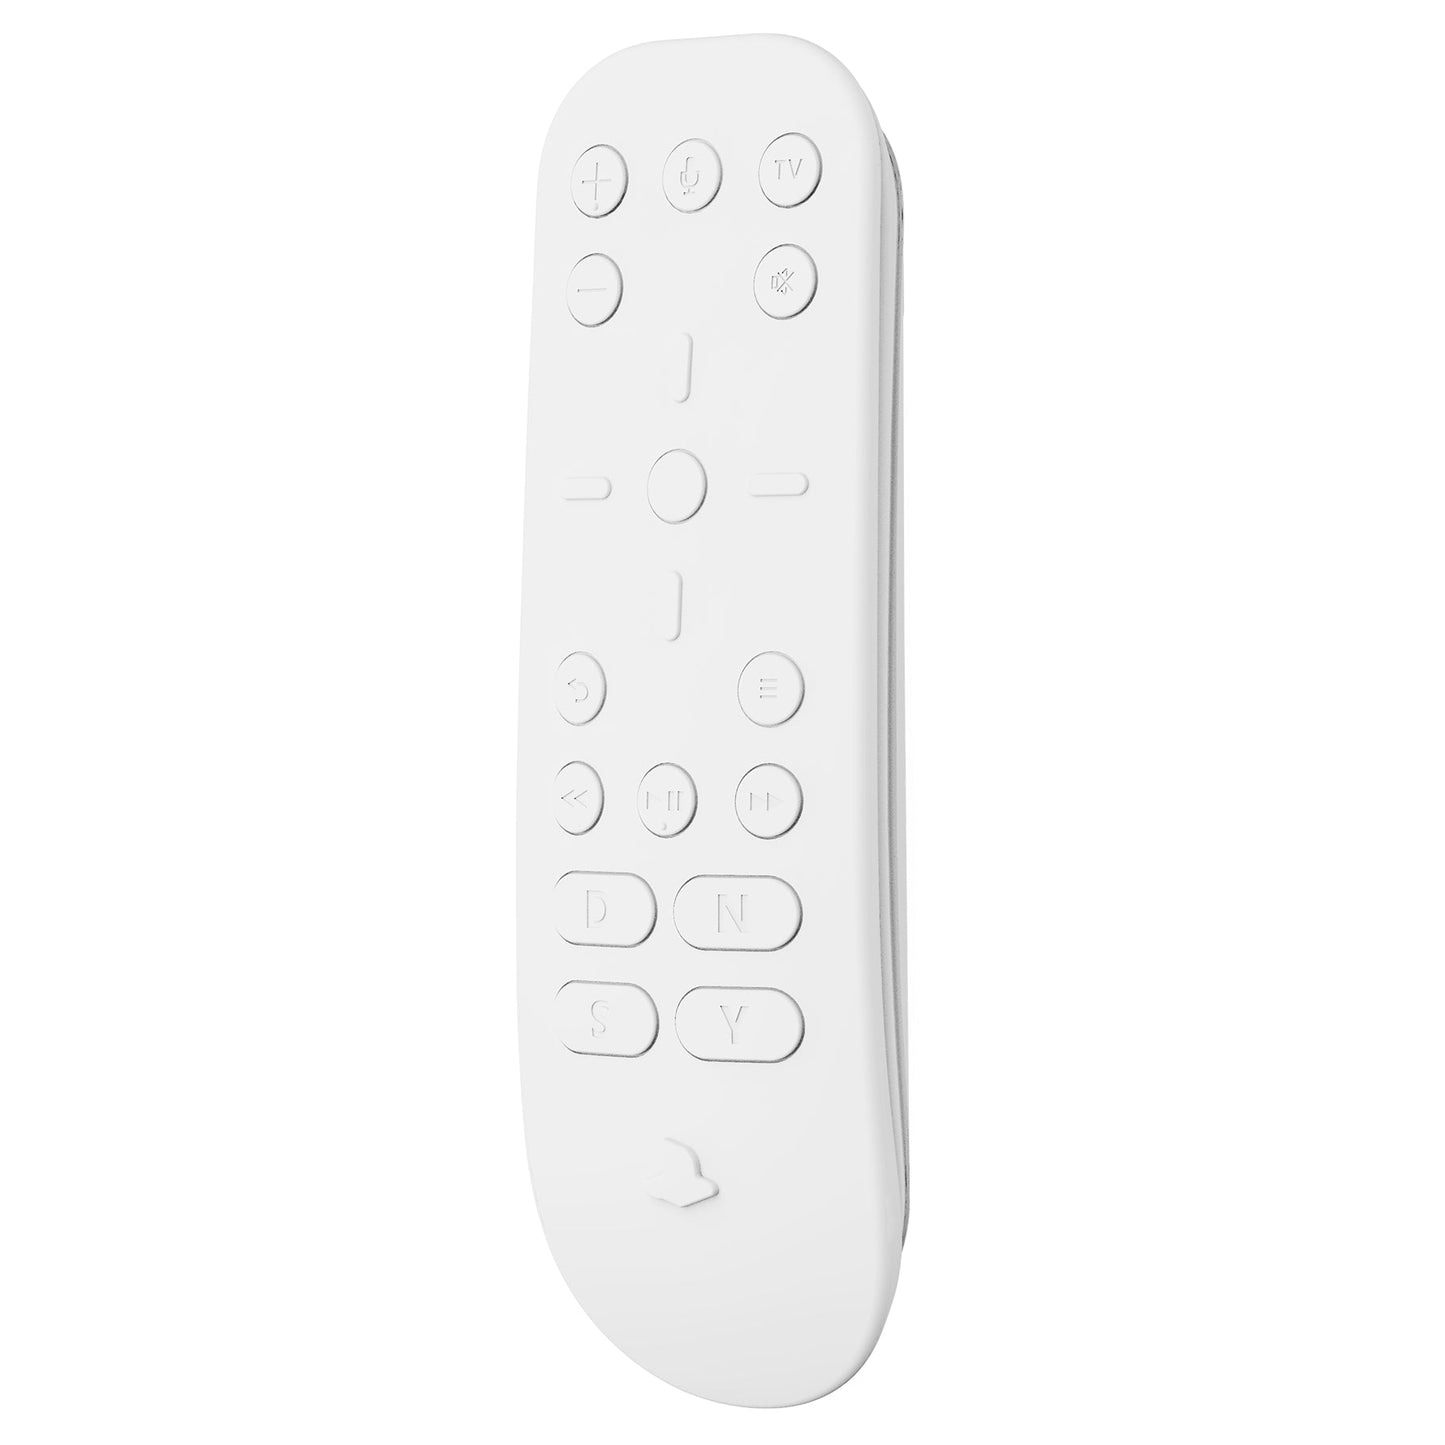 PlayVital White Silicone Protective Remote Case for PS5 Media Remote Cover, Ergonomic Design Full Body Protector Skin for PS5 Remote Control - PFPJ036 PlayVital